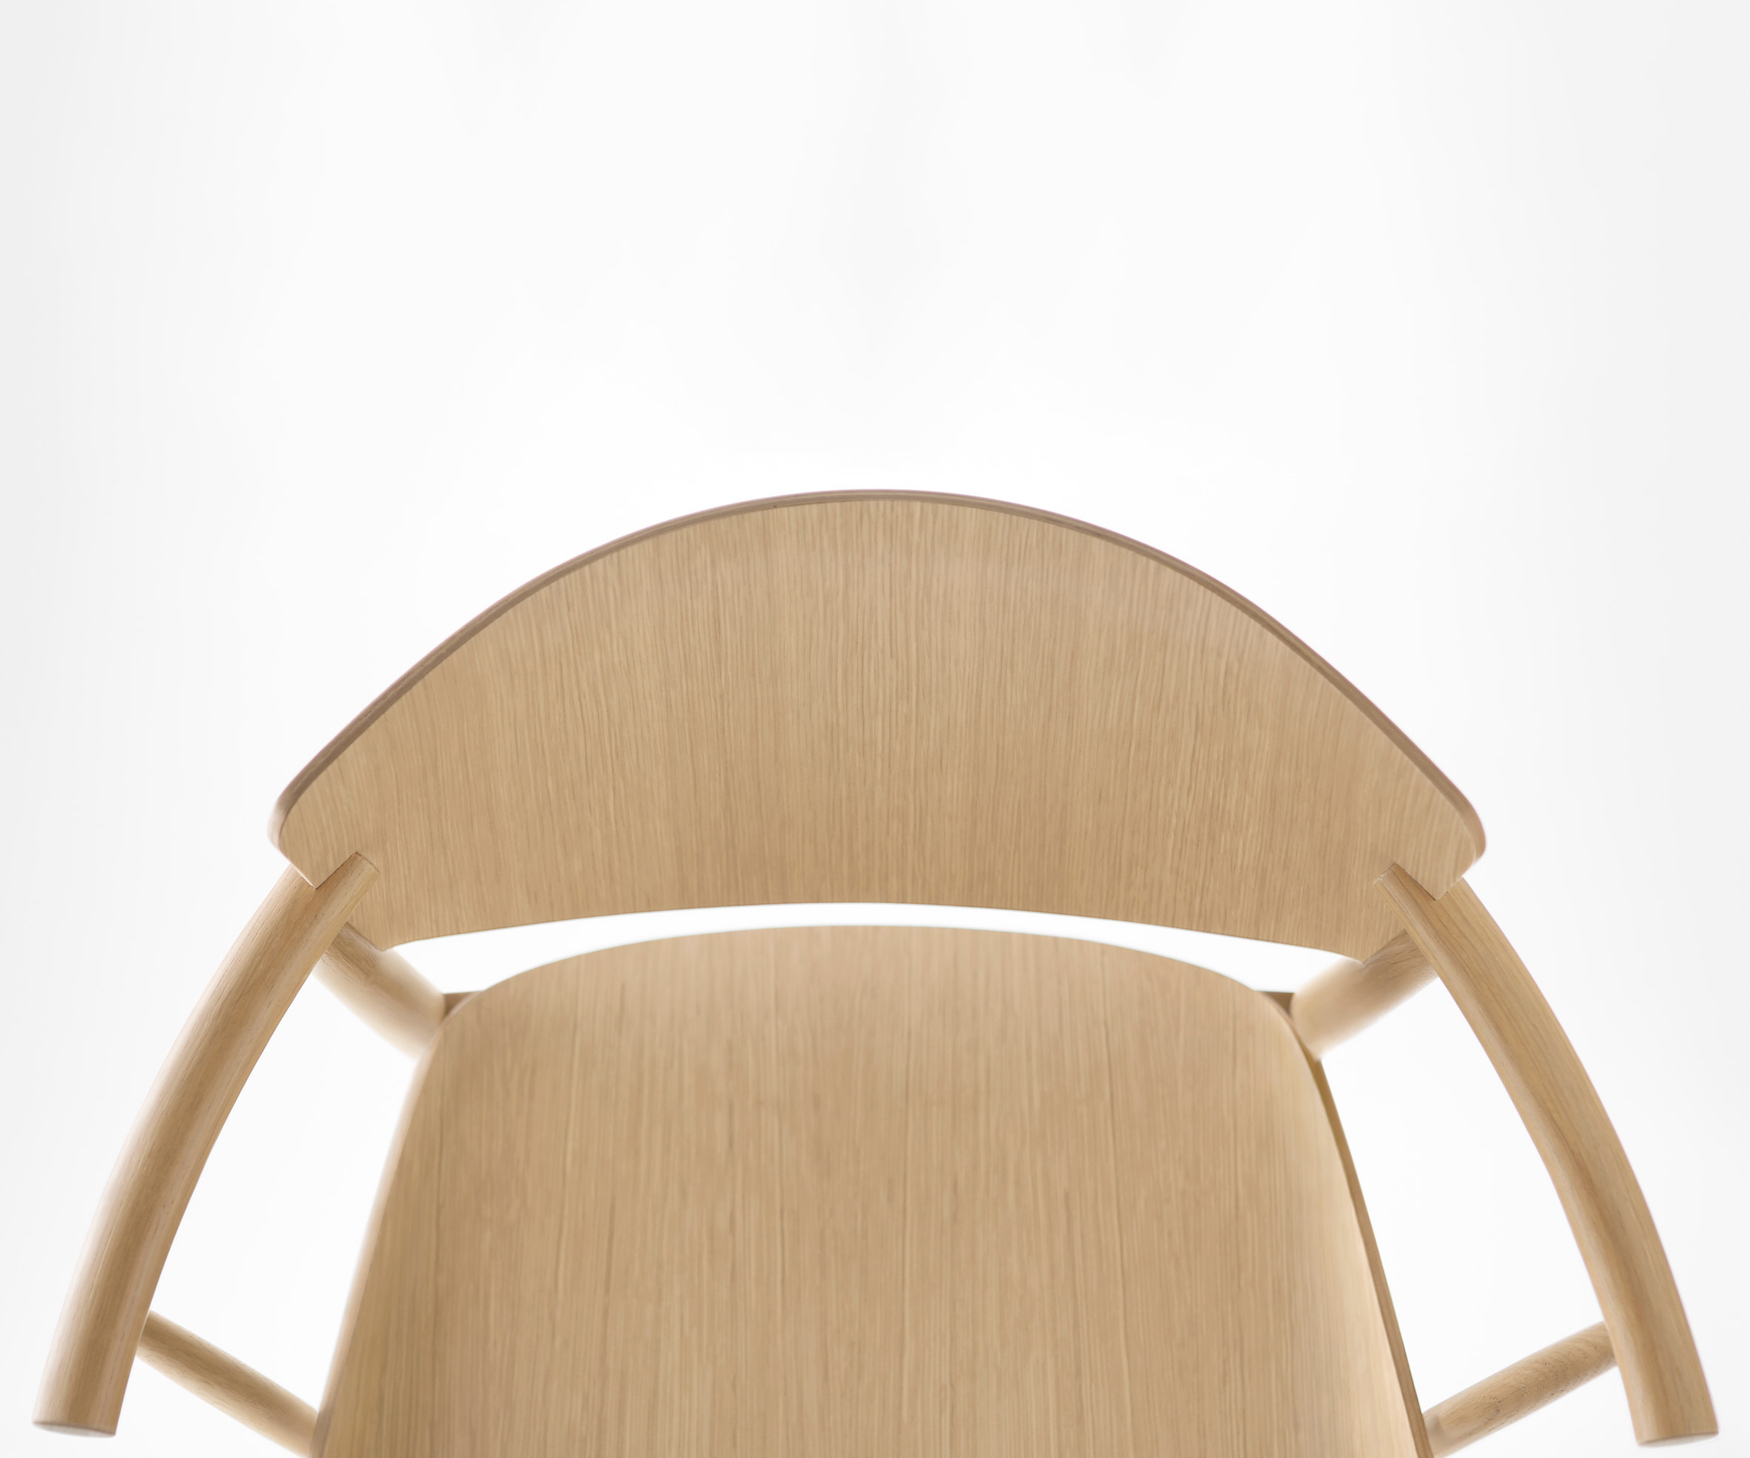 N01 Chair by Nendo for Fritz Hansen